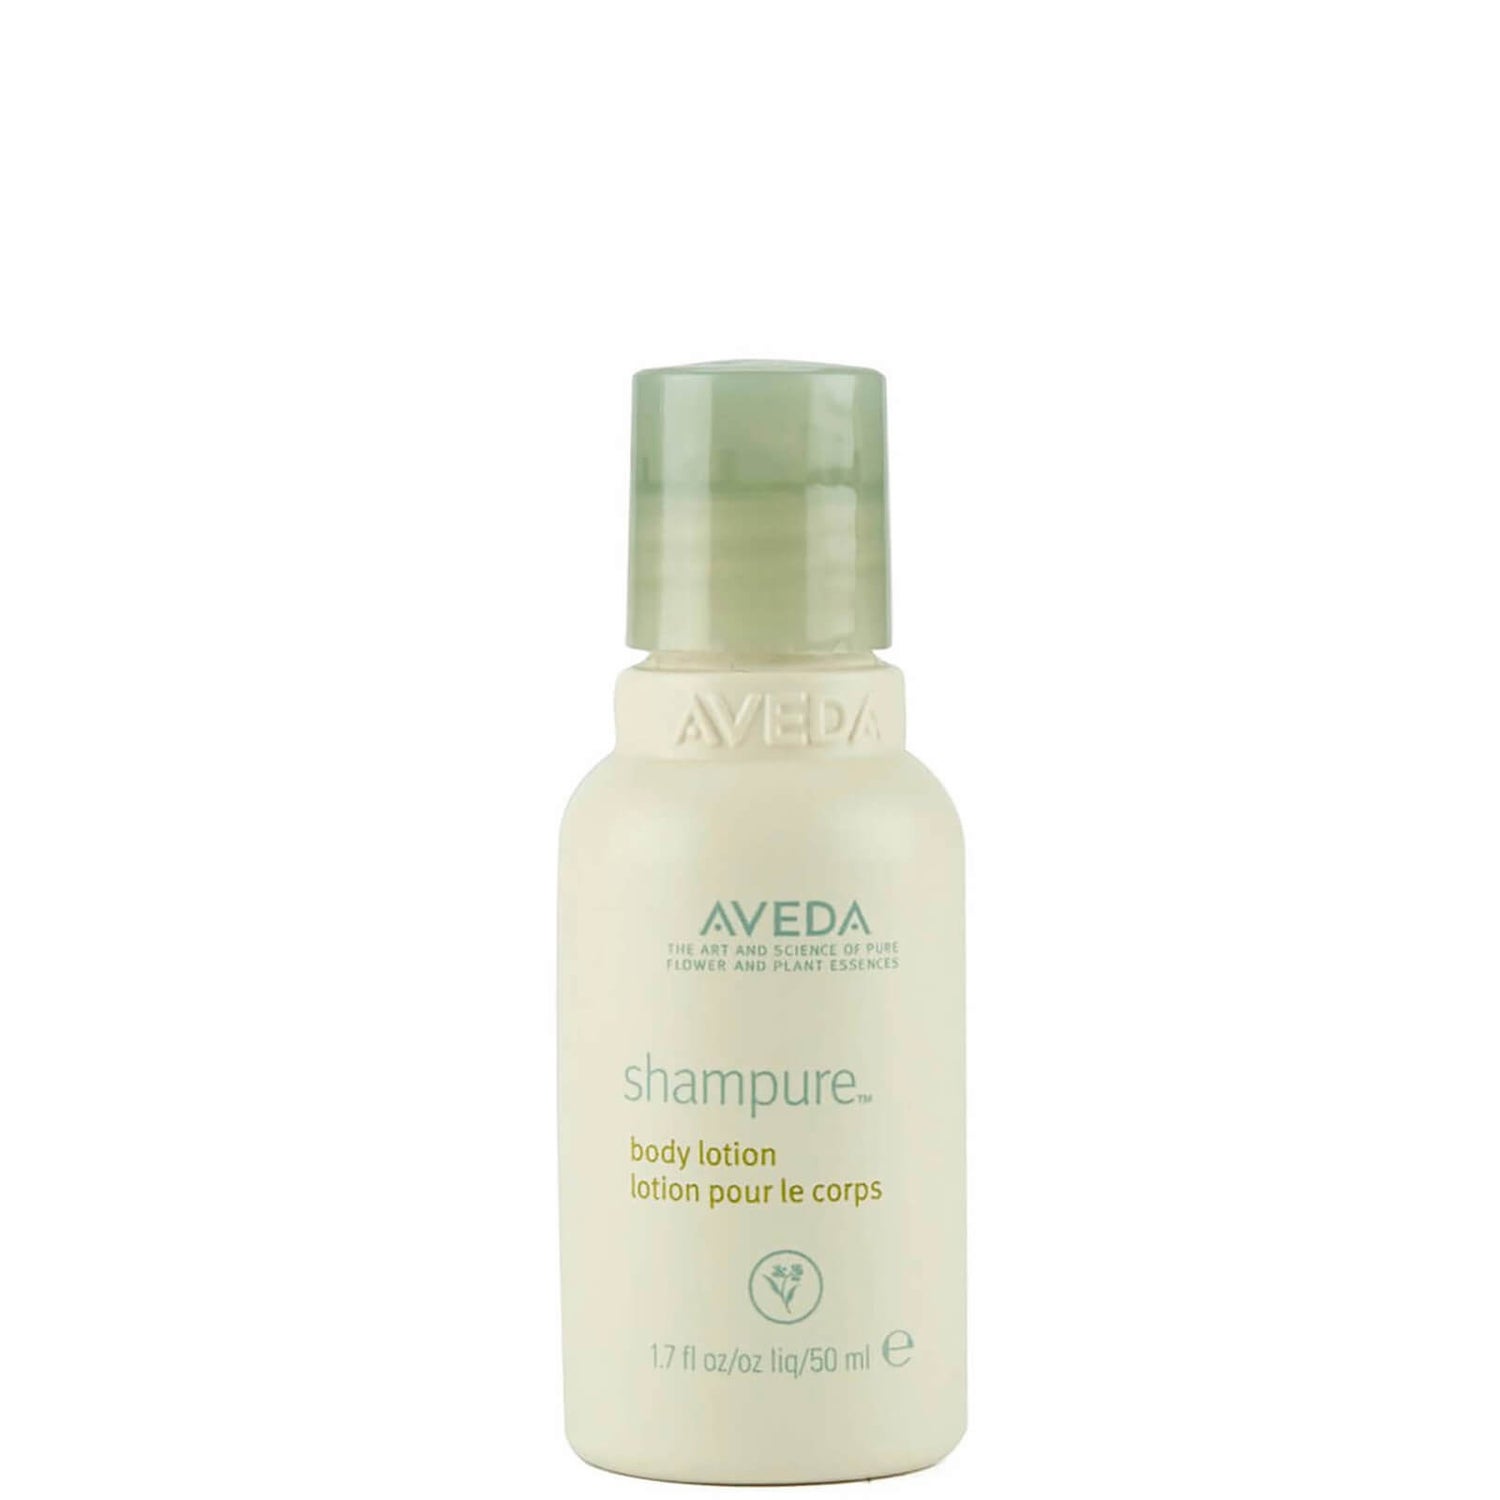 Aveda shampure Lotion pour le corps (50ml)